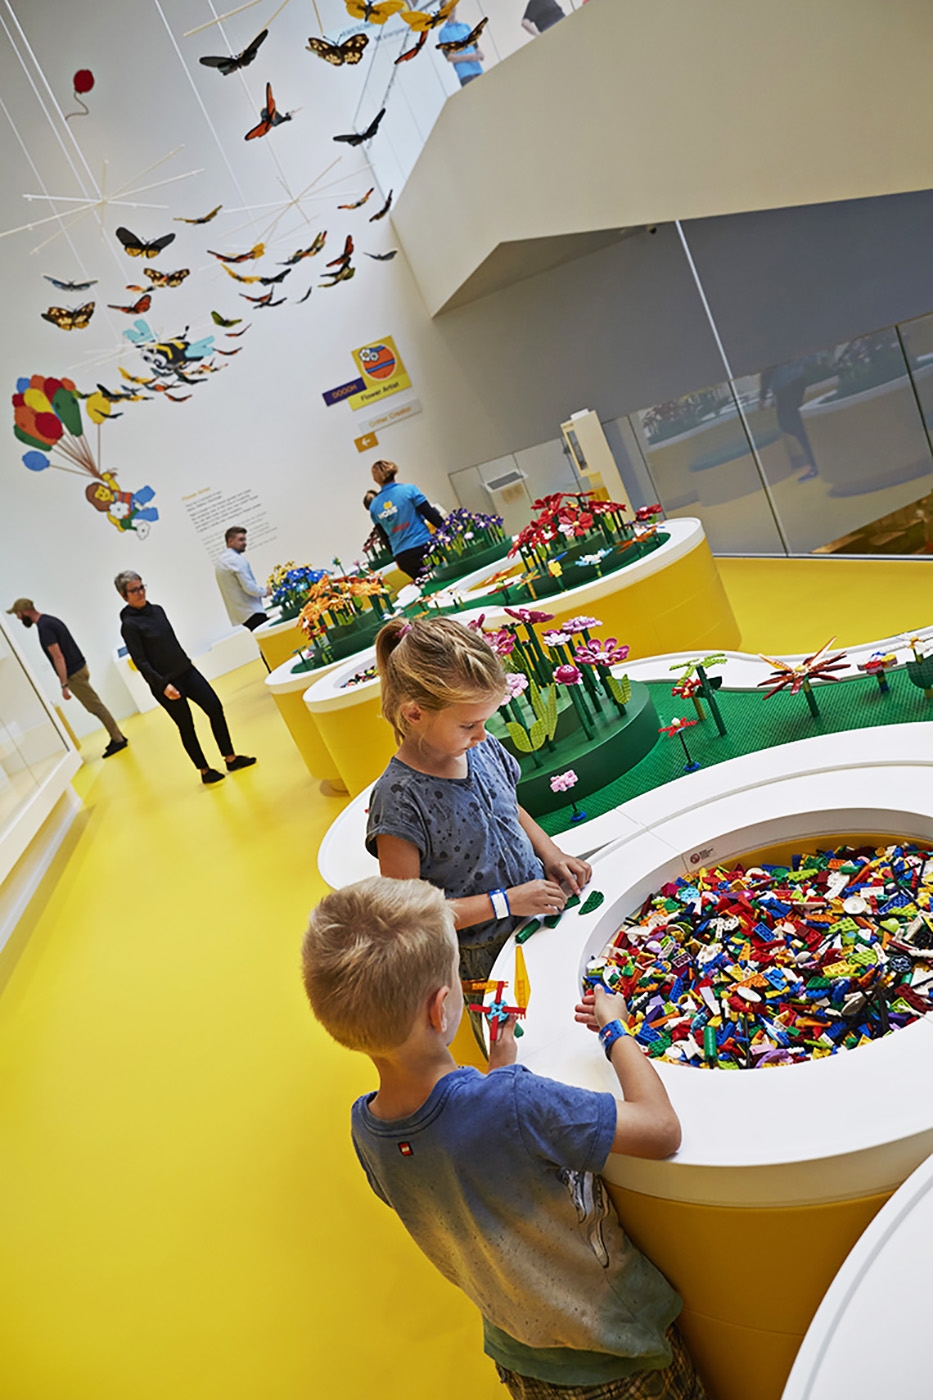 Sala de Lego House para jugar.